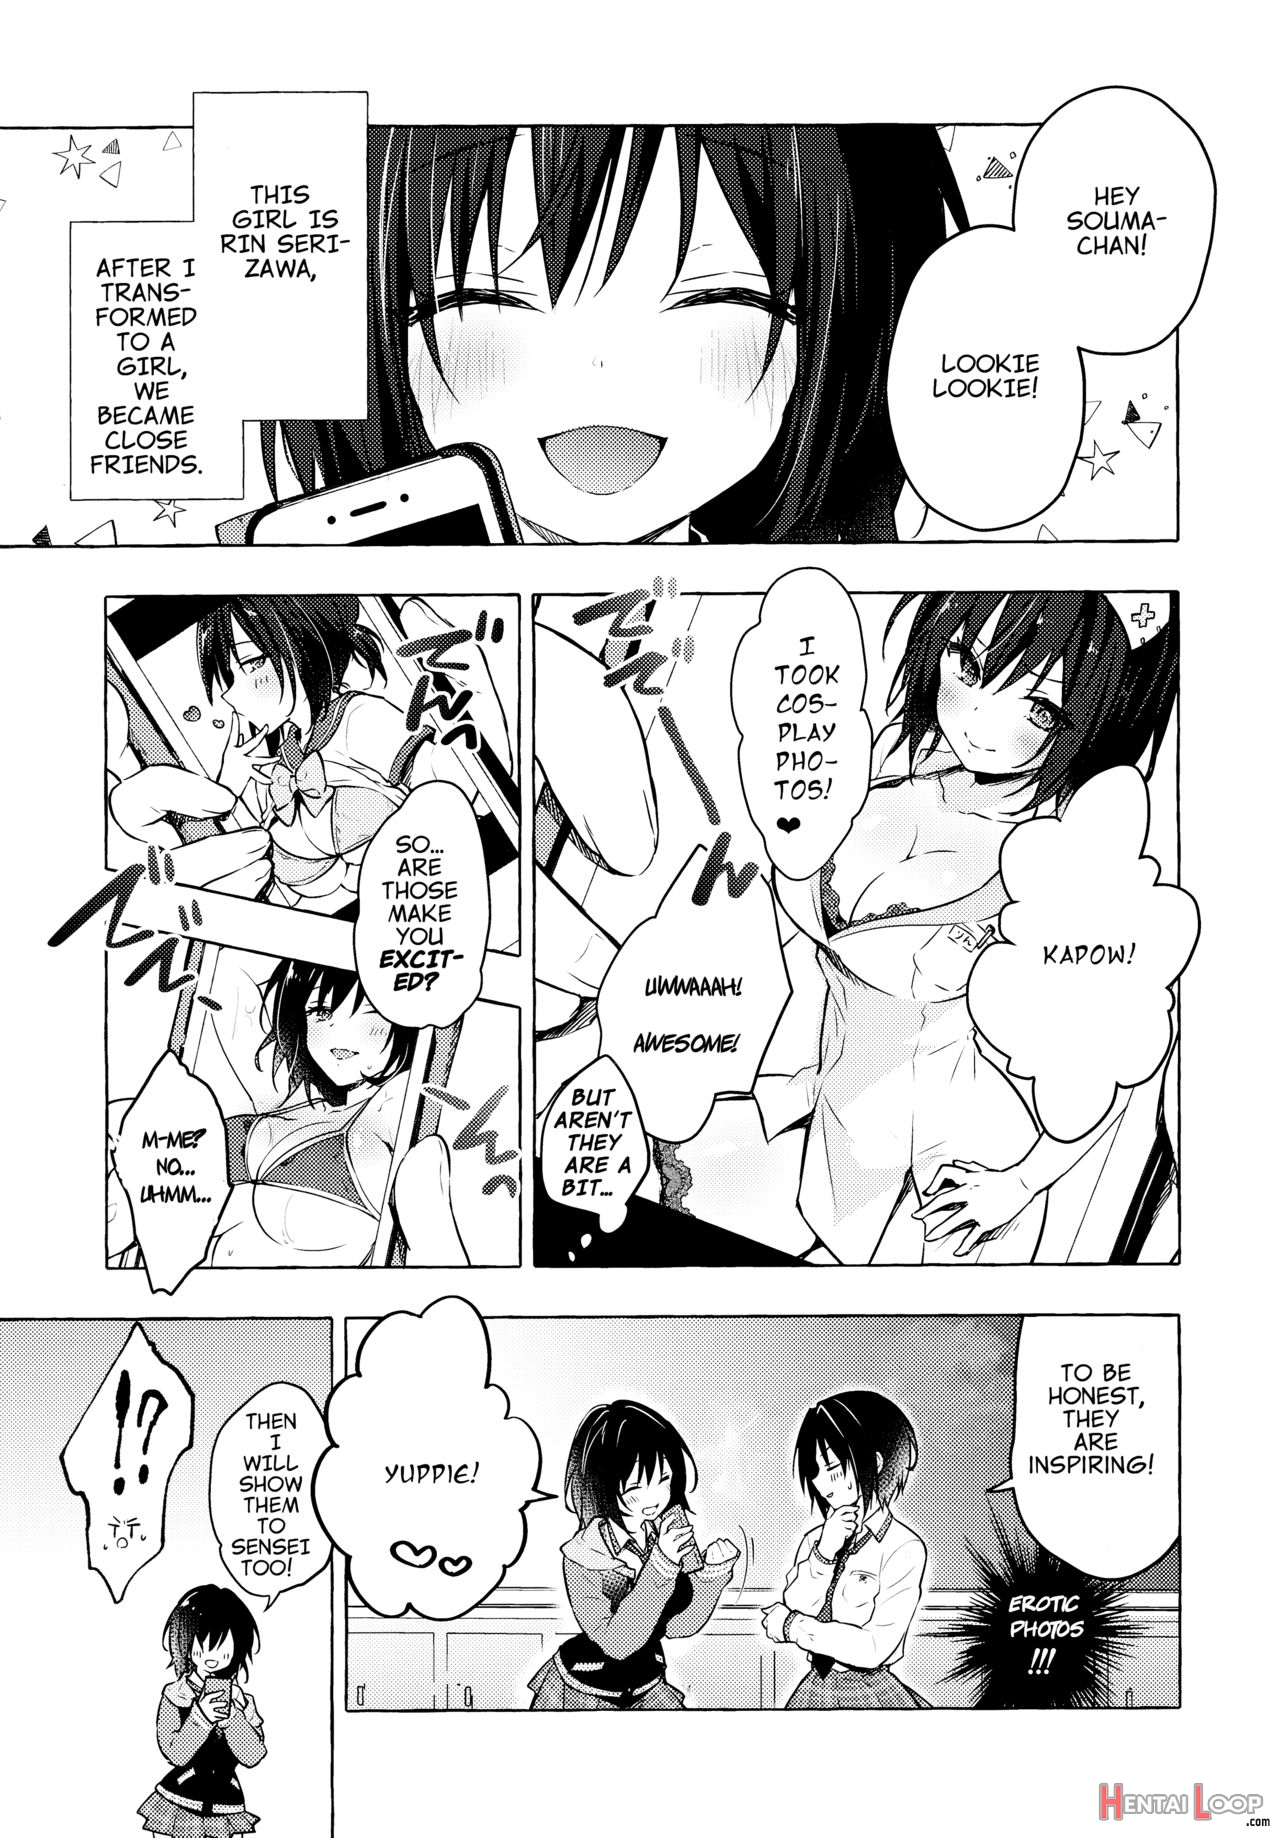 Akira-kun's Sex Life 4 page 4